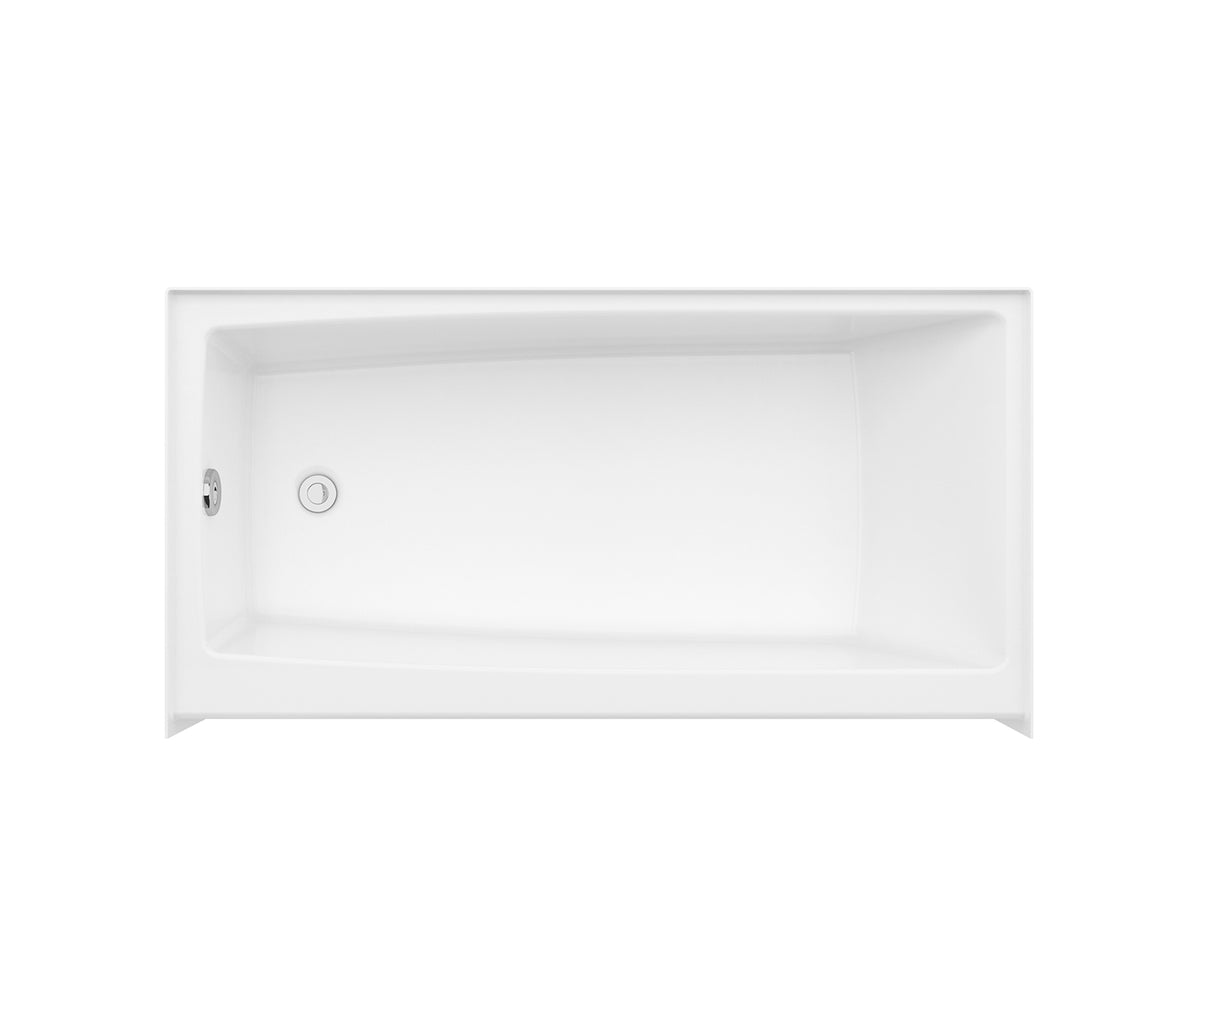 MAAX 106883-000-002-101 Jaxi 6032 AcrylX Alcove Right-Hand Drain Bathtub in White